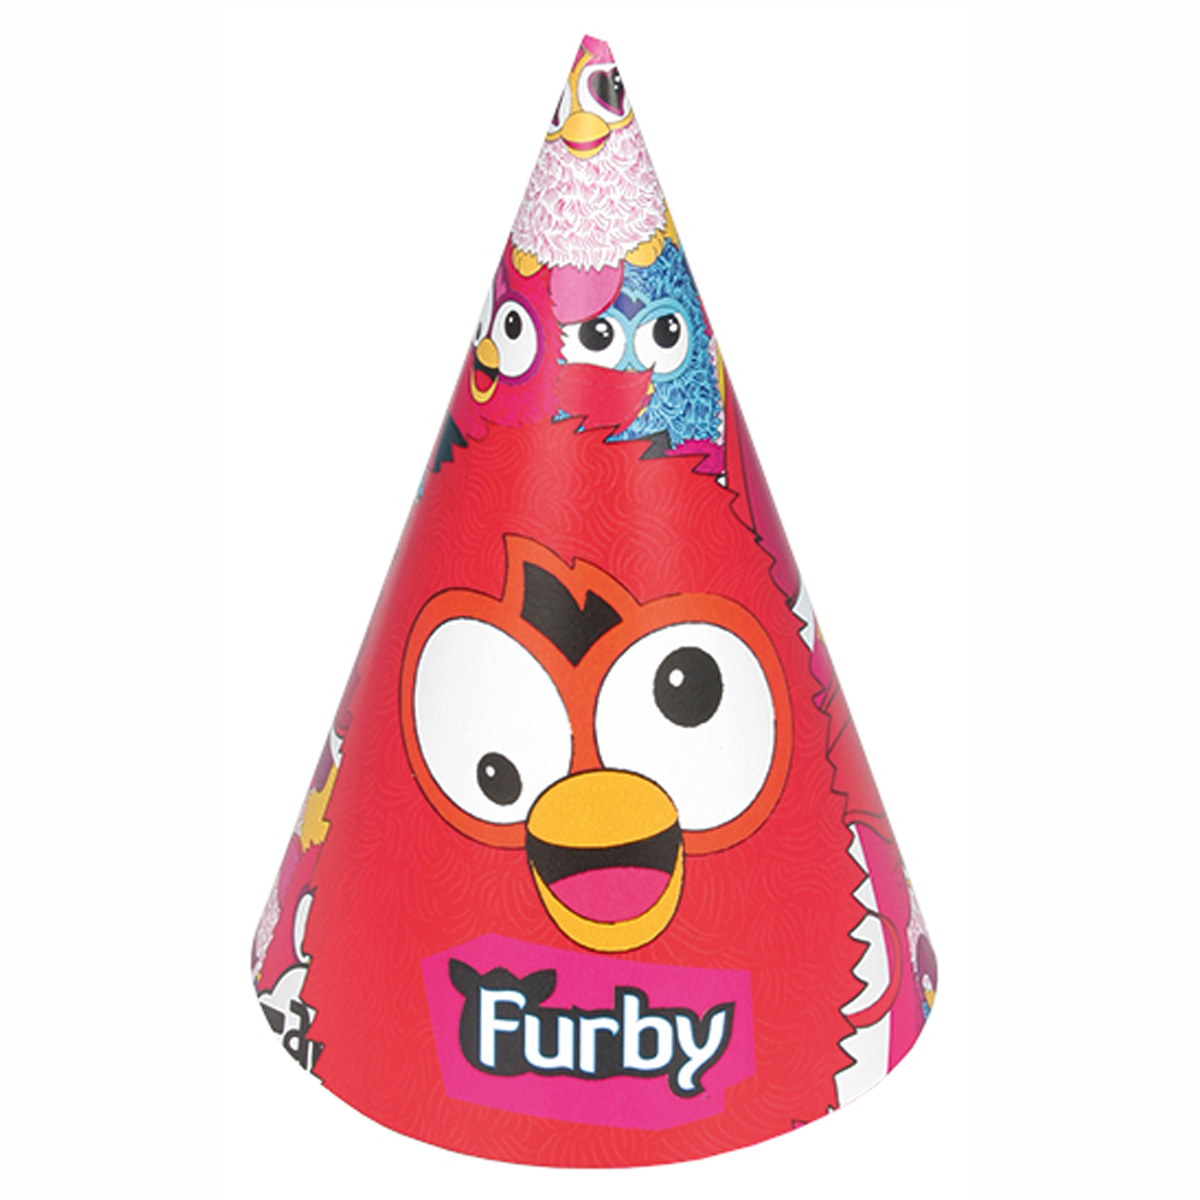 Furby Party Hats 6pcs Party Accessories - Party Centre